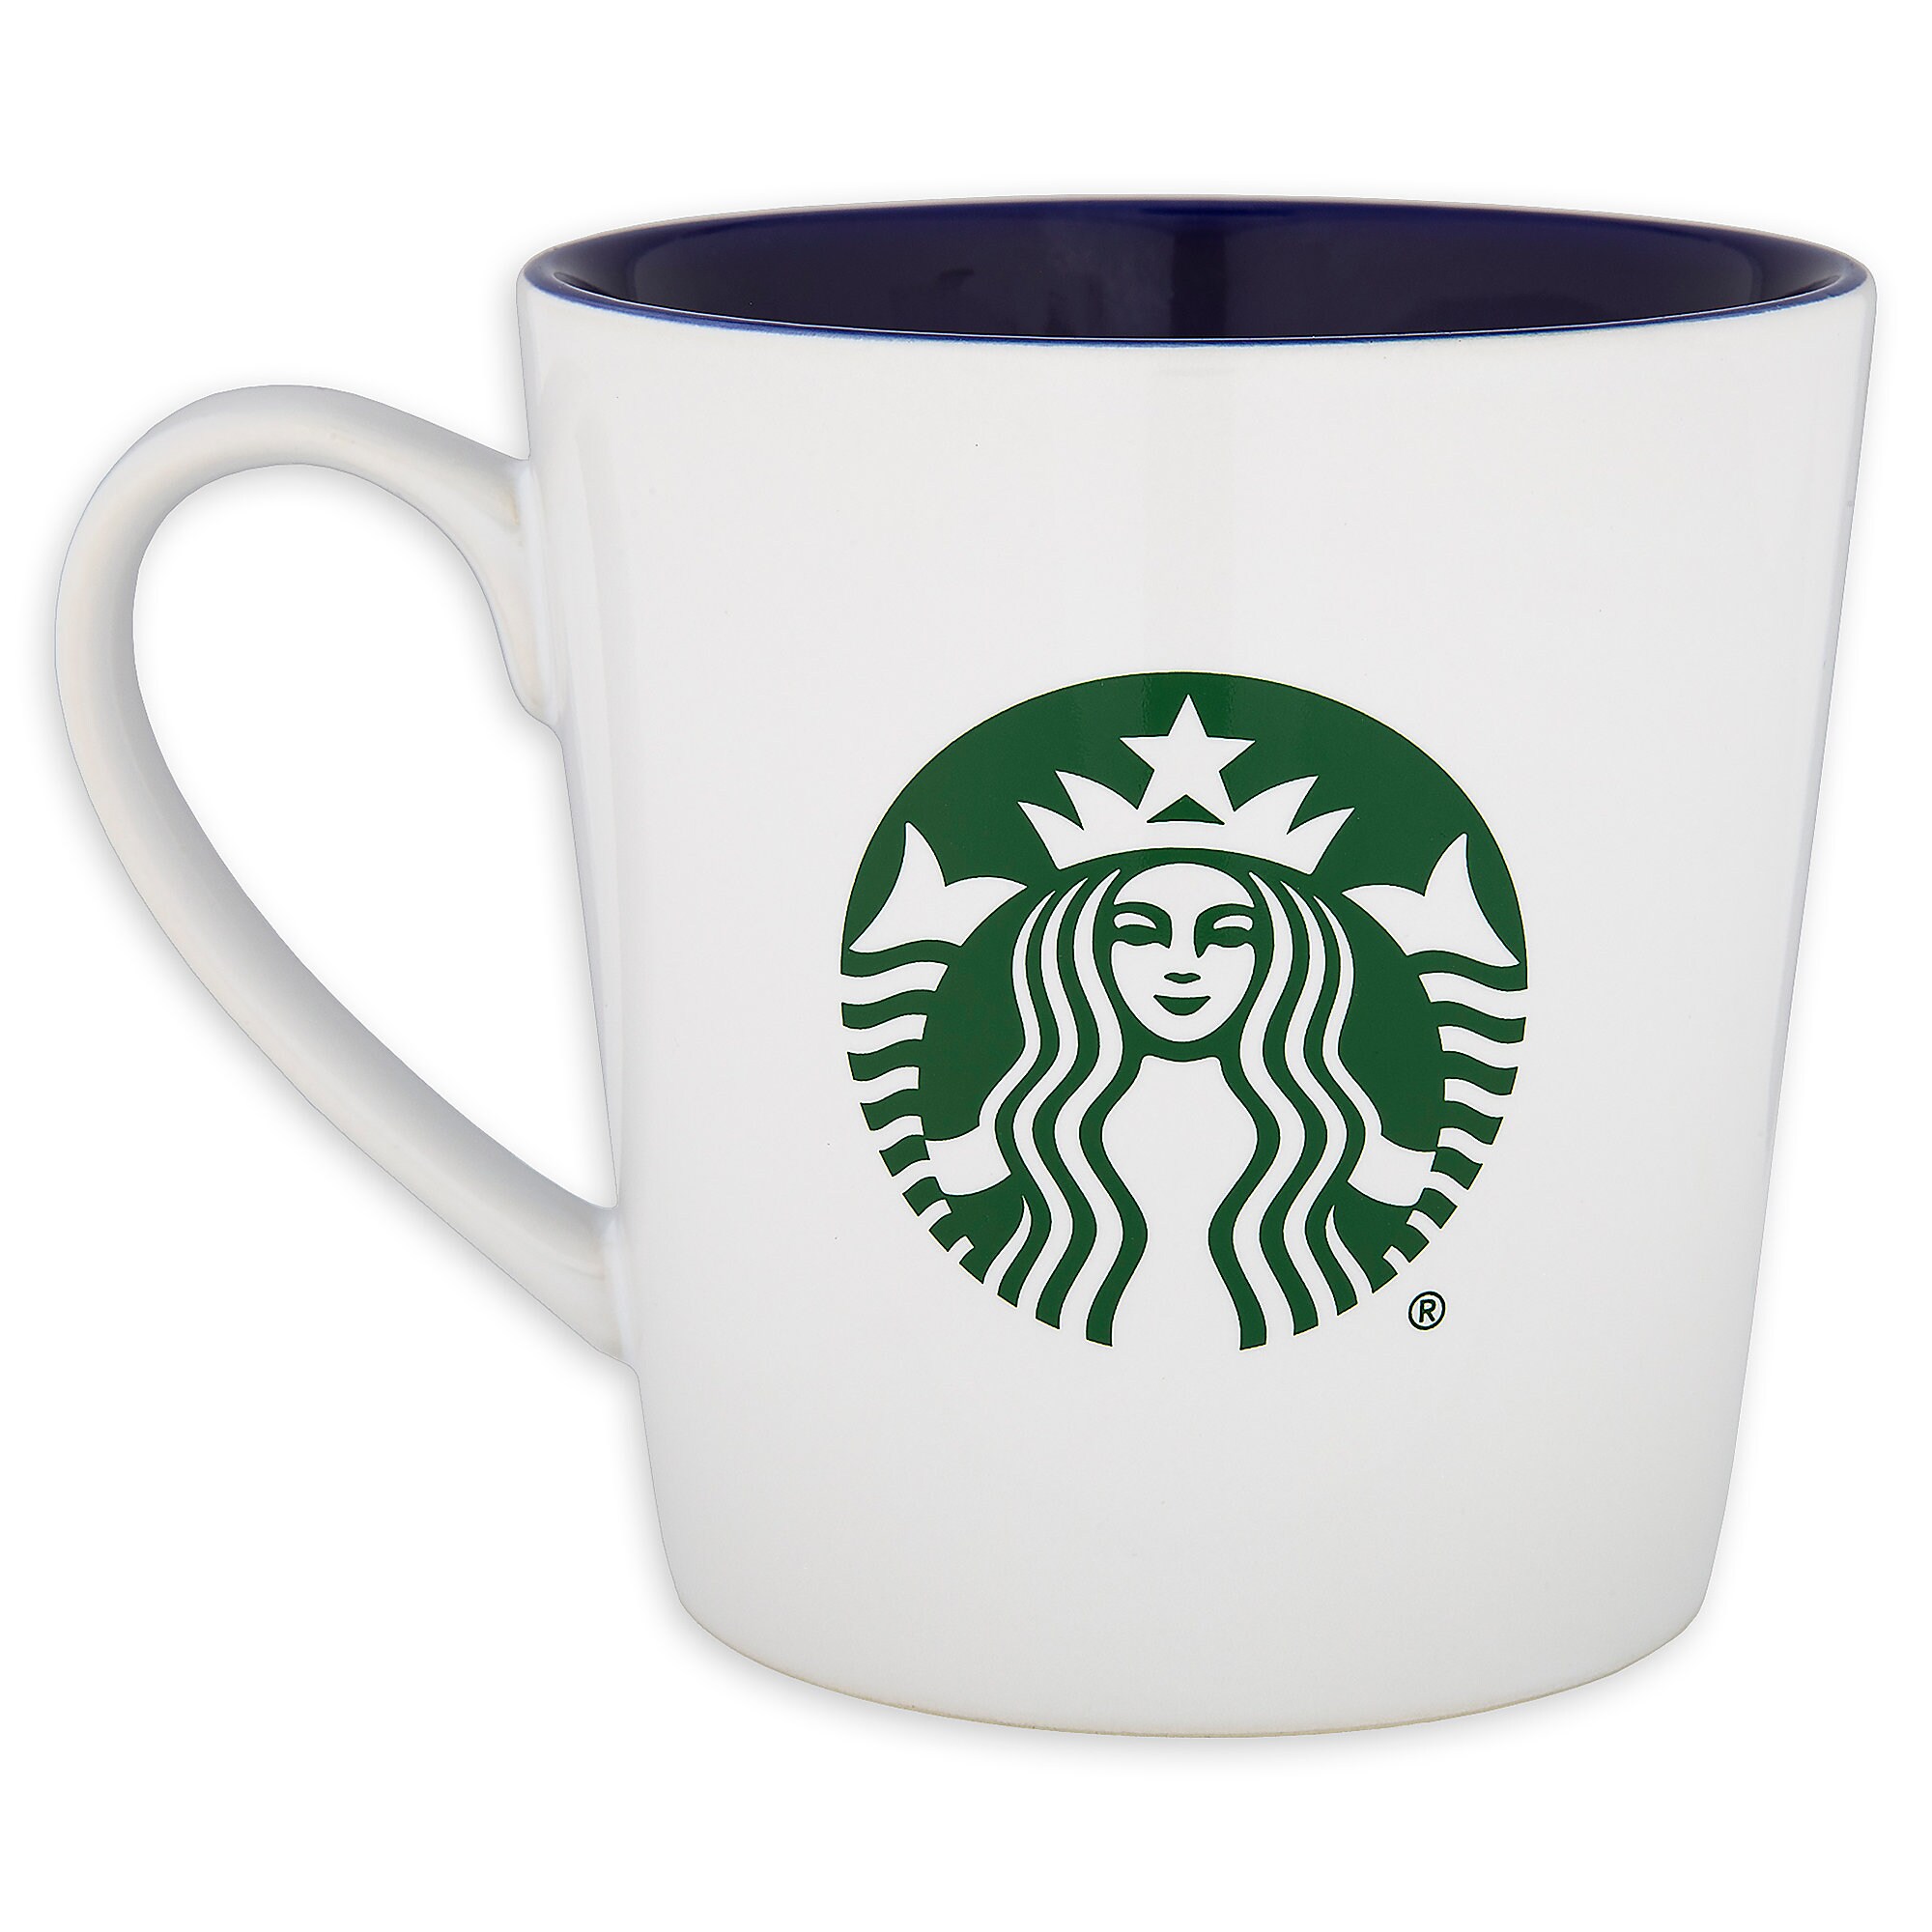 Epcot 35th Anniversary Mug by Starbucks